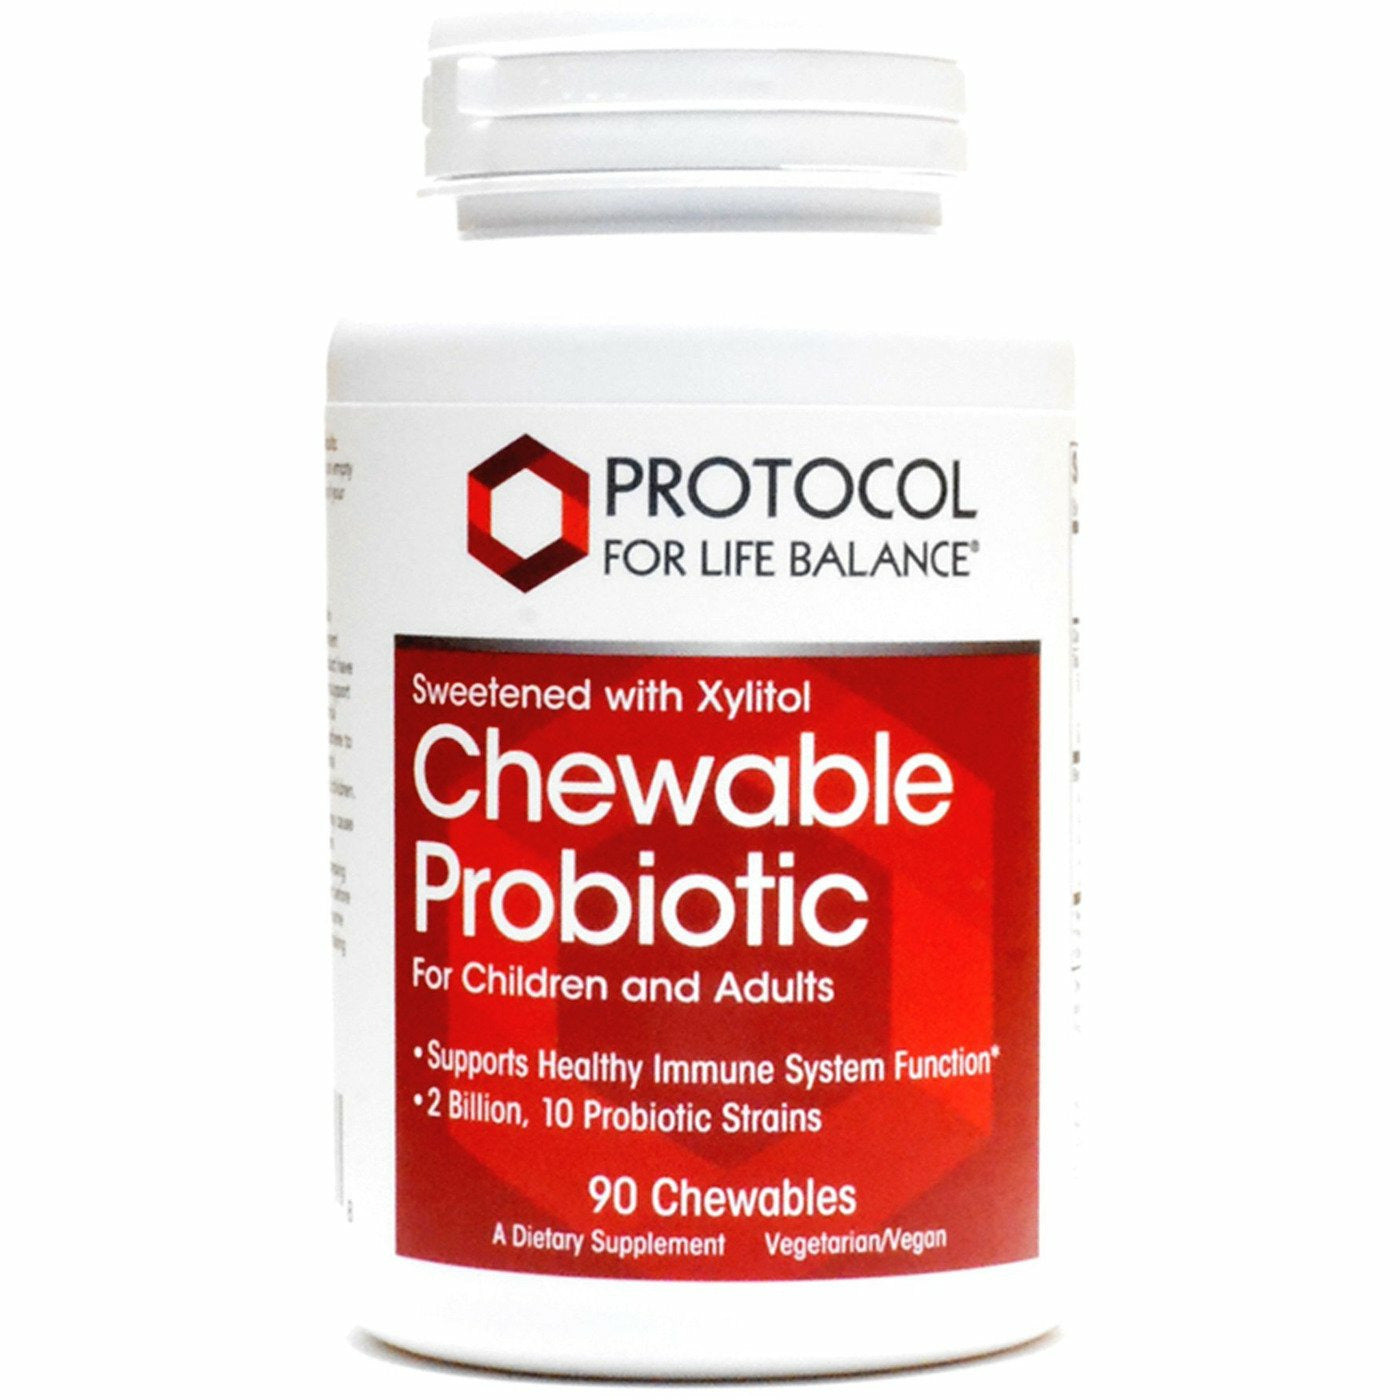 Chewable Probiotic